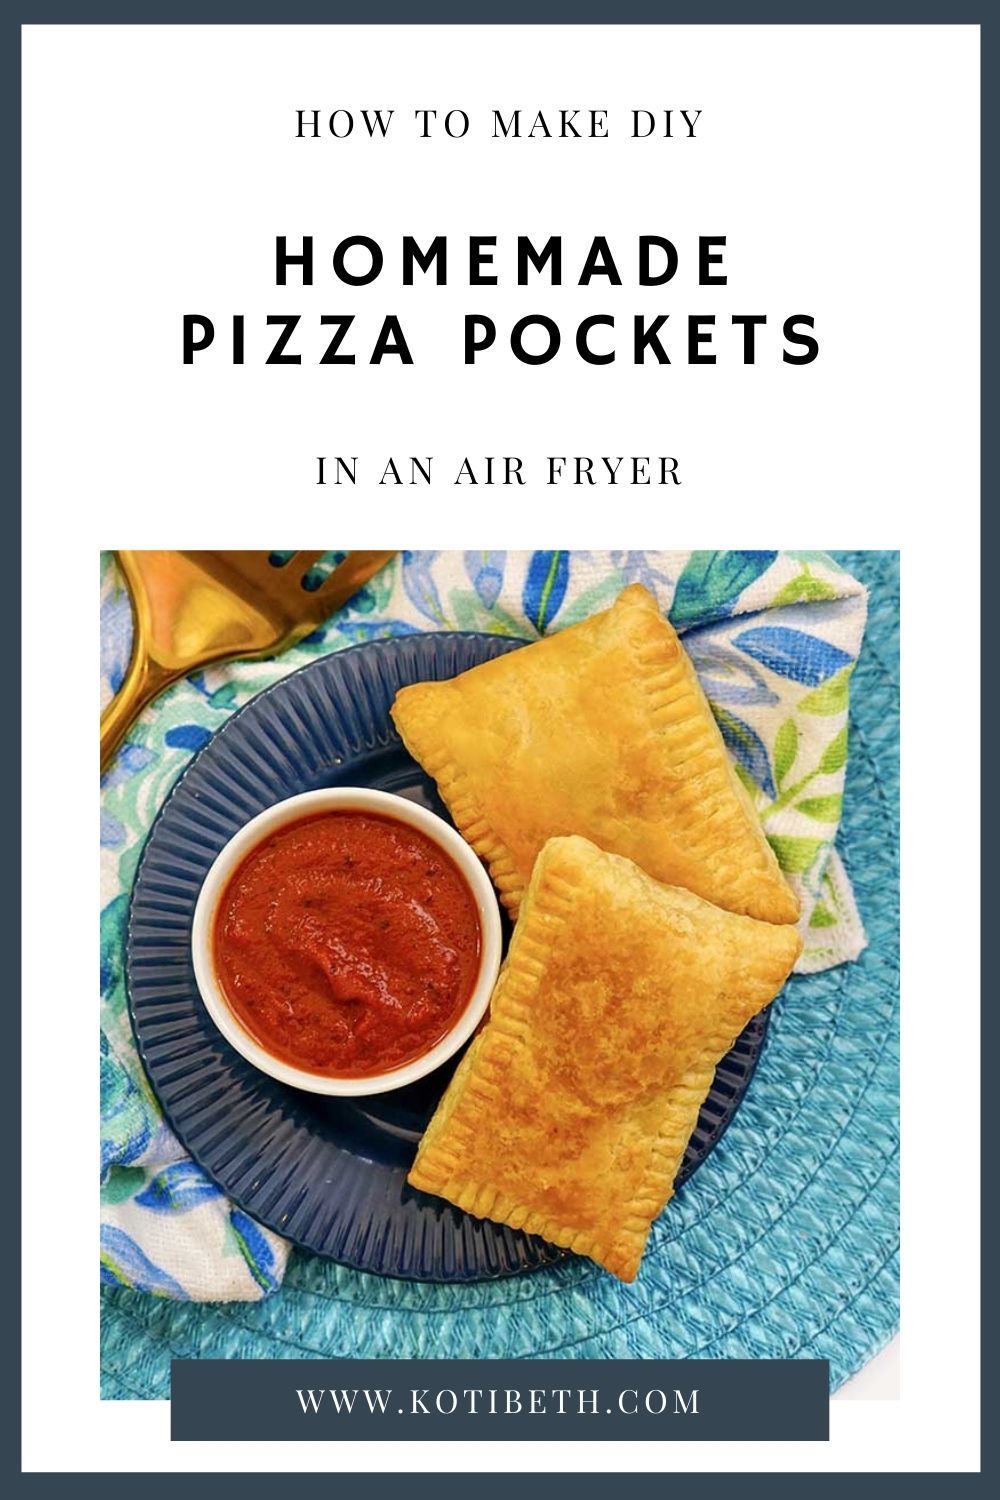 Air fryer pizza pockets